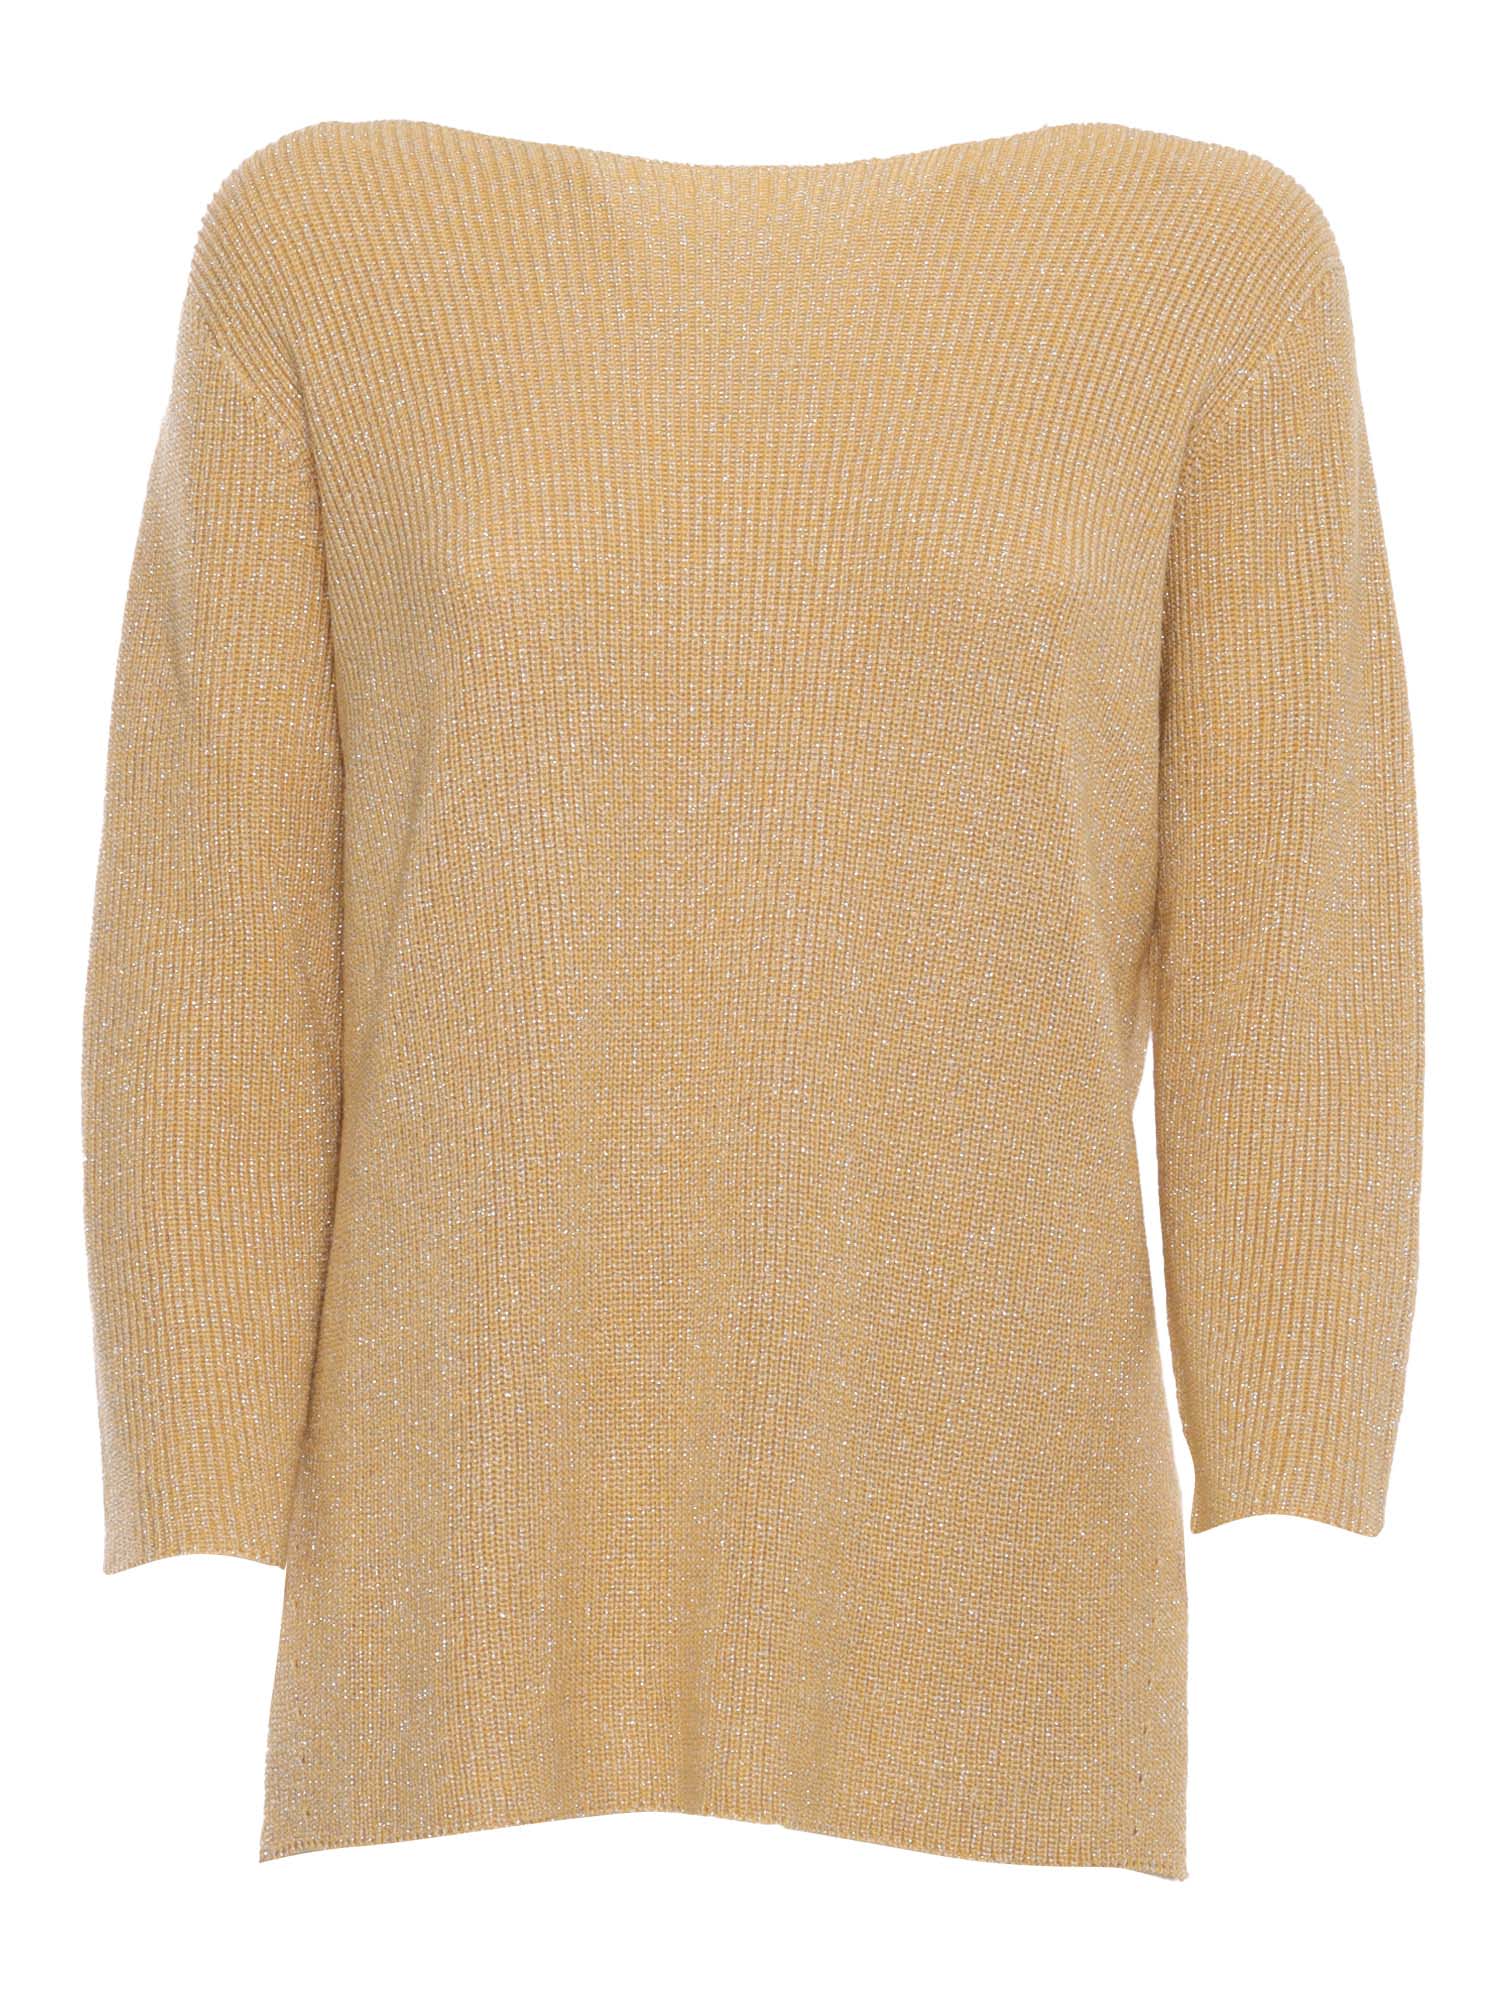 Orange Yarn Sweater